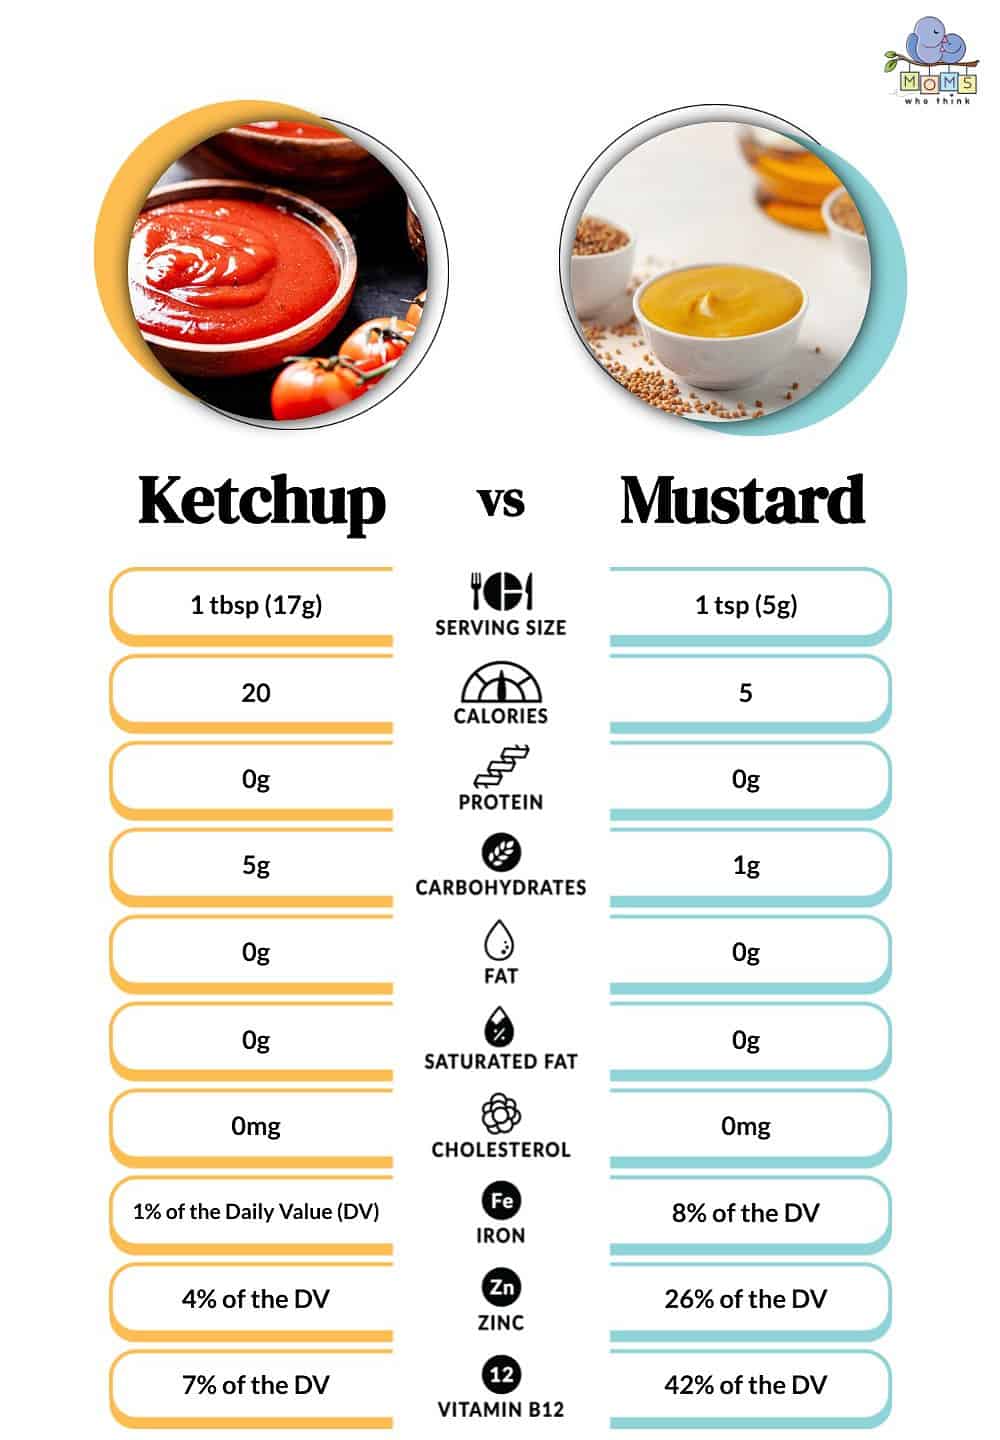 Ketchup vs Mustard Nutrition Comparison